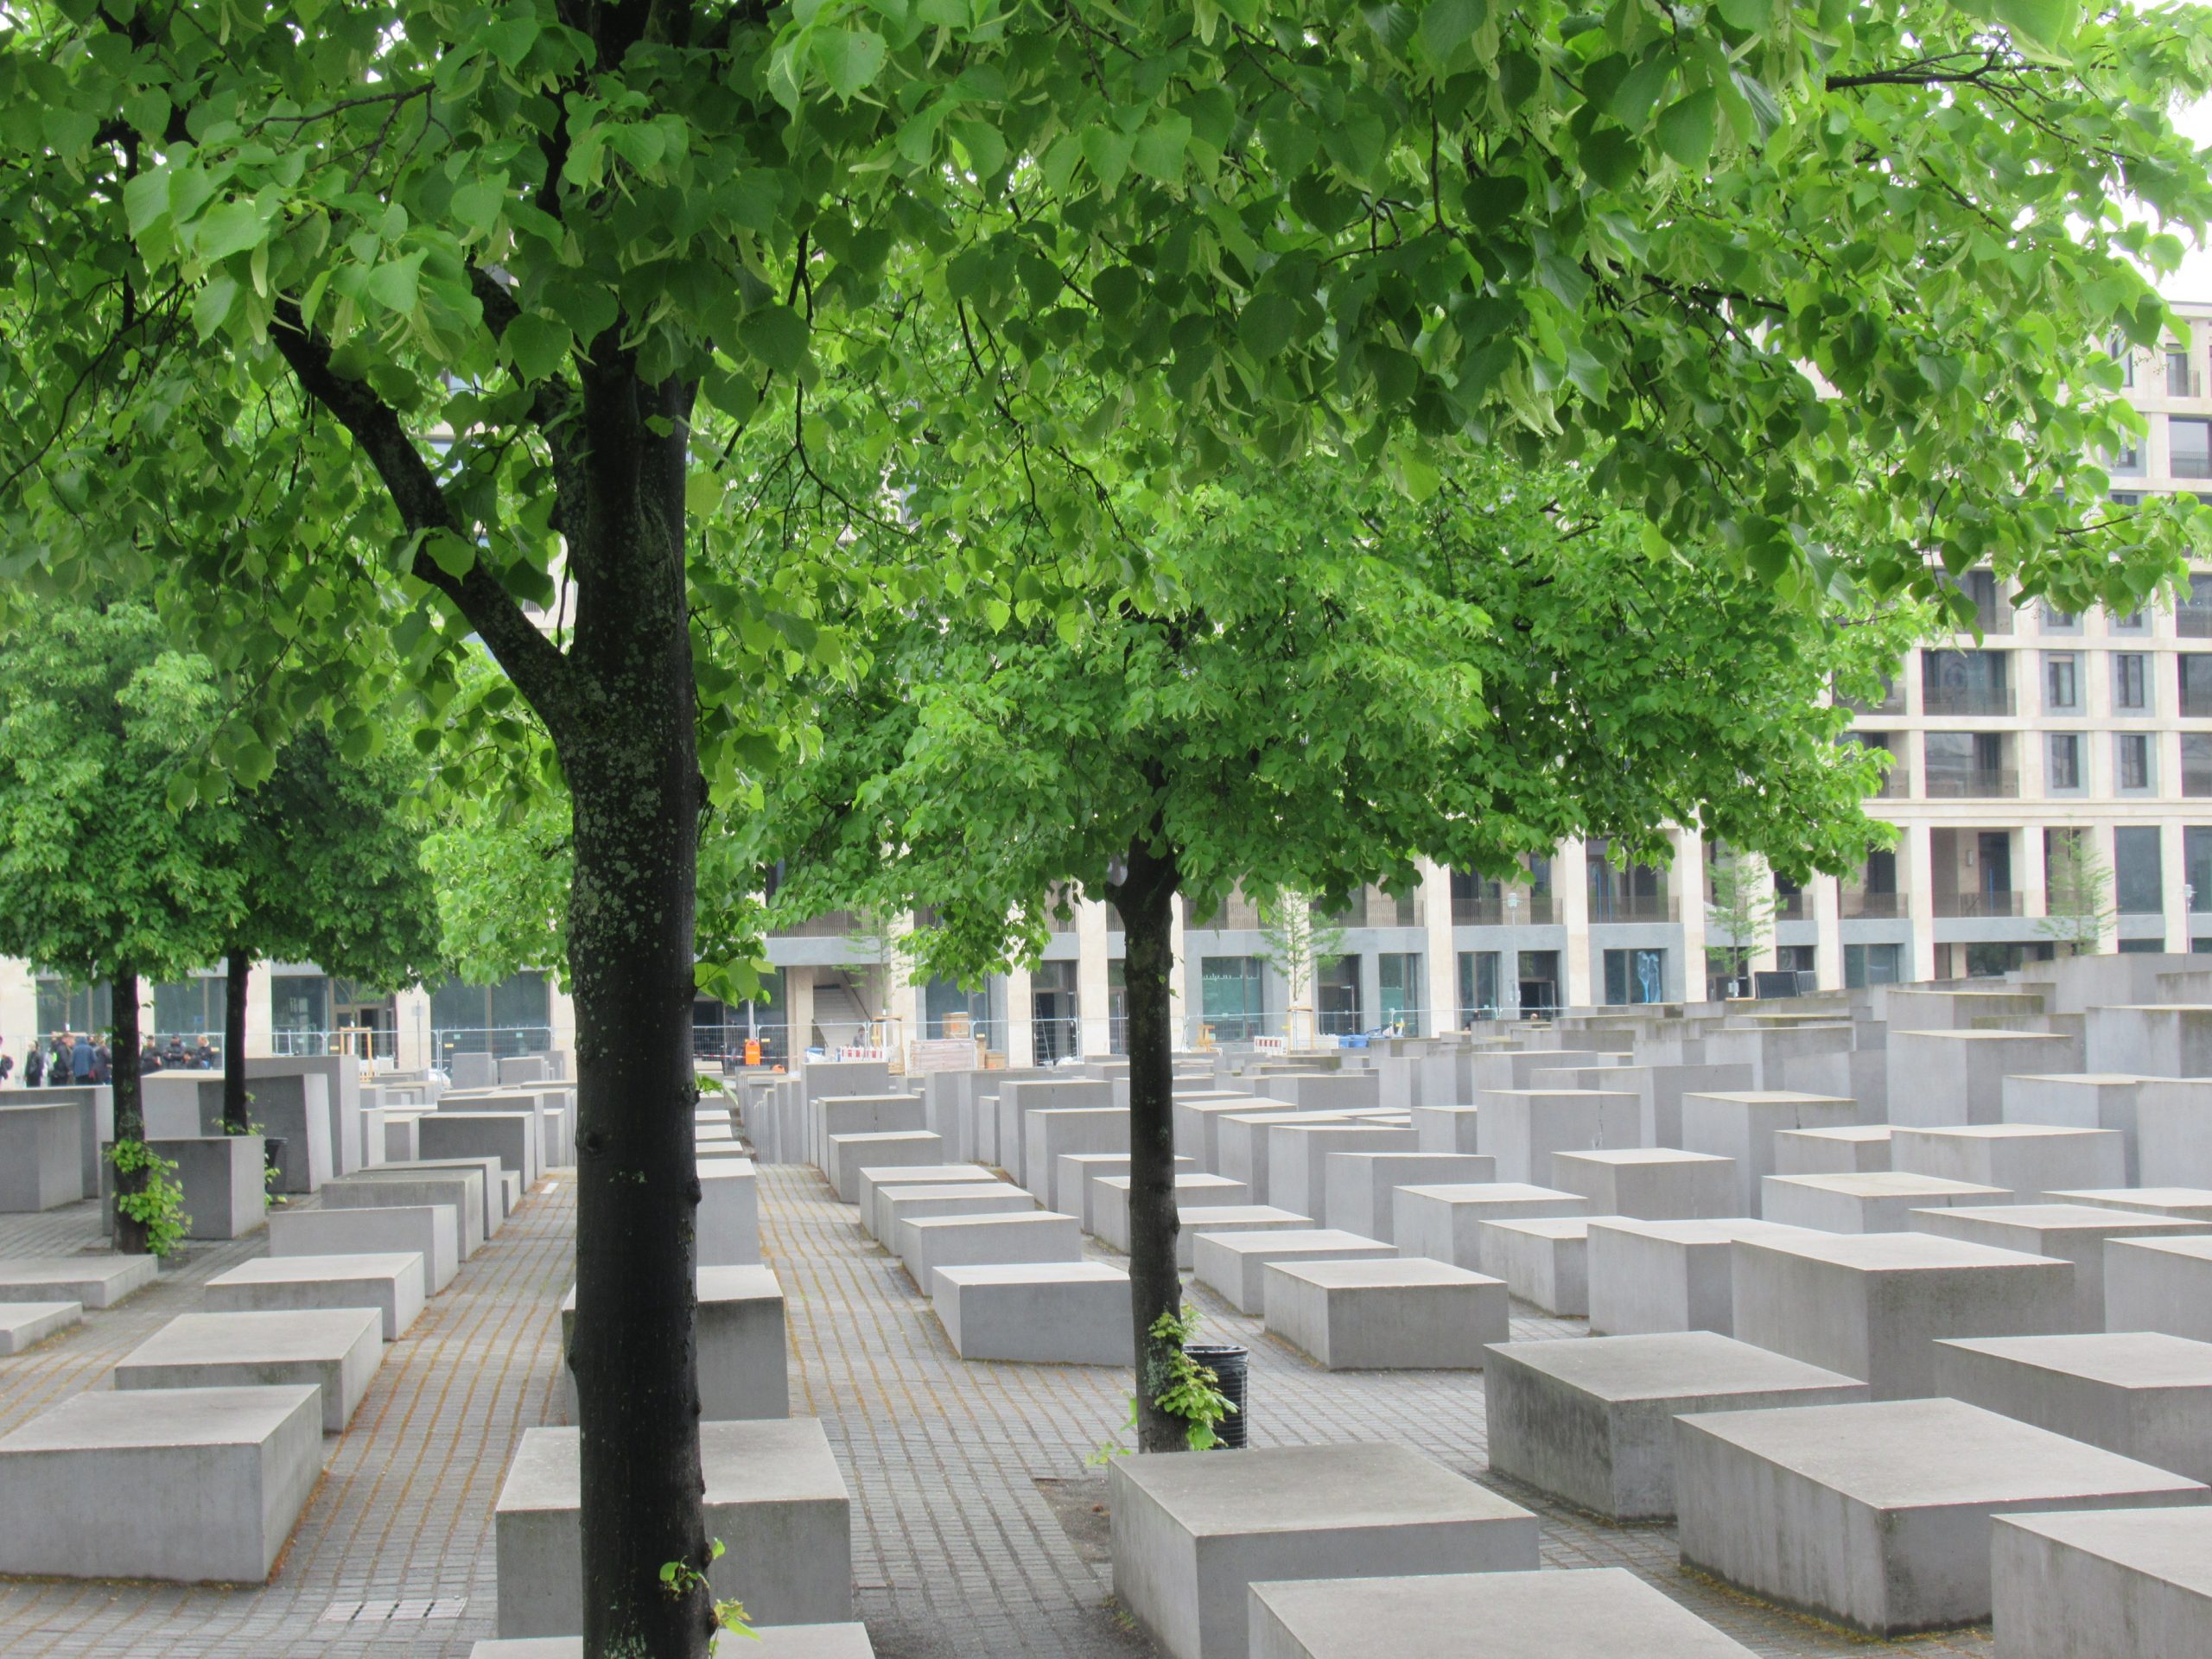 The Holocaust Memorial, Berlin